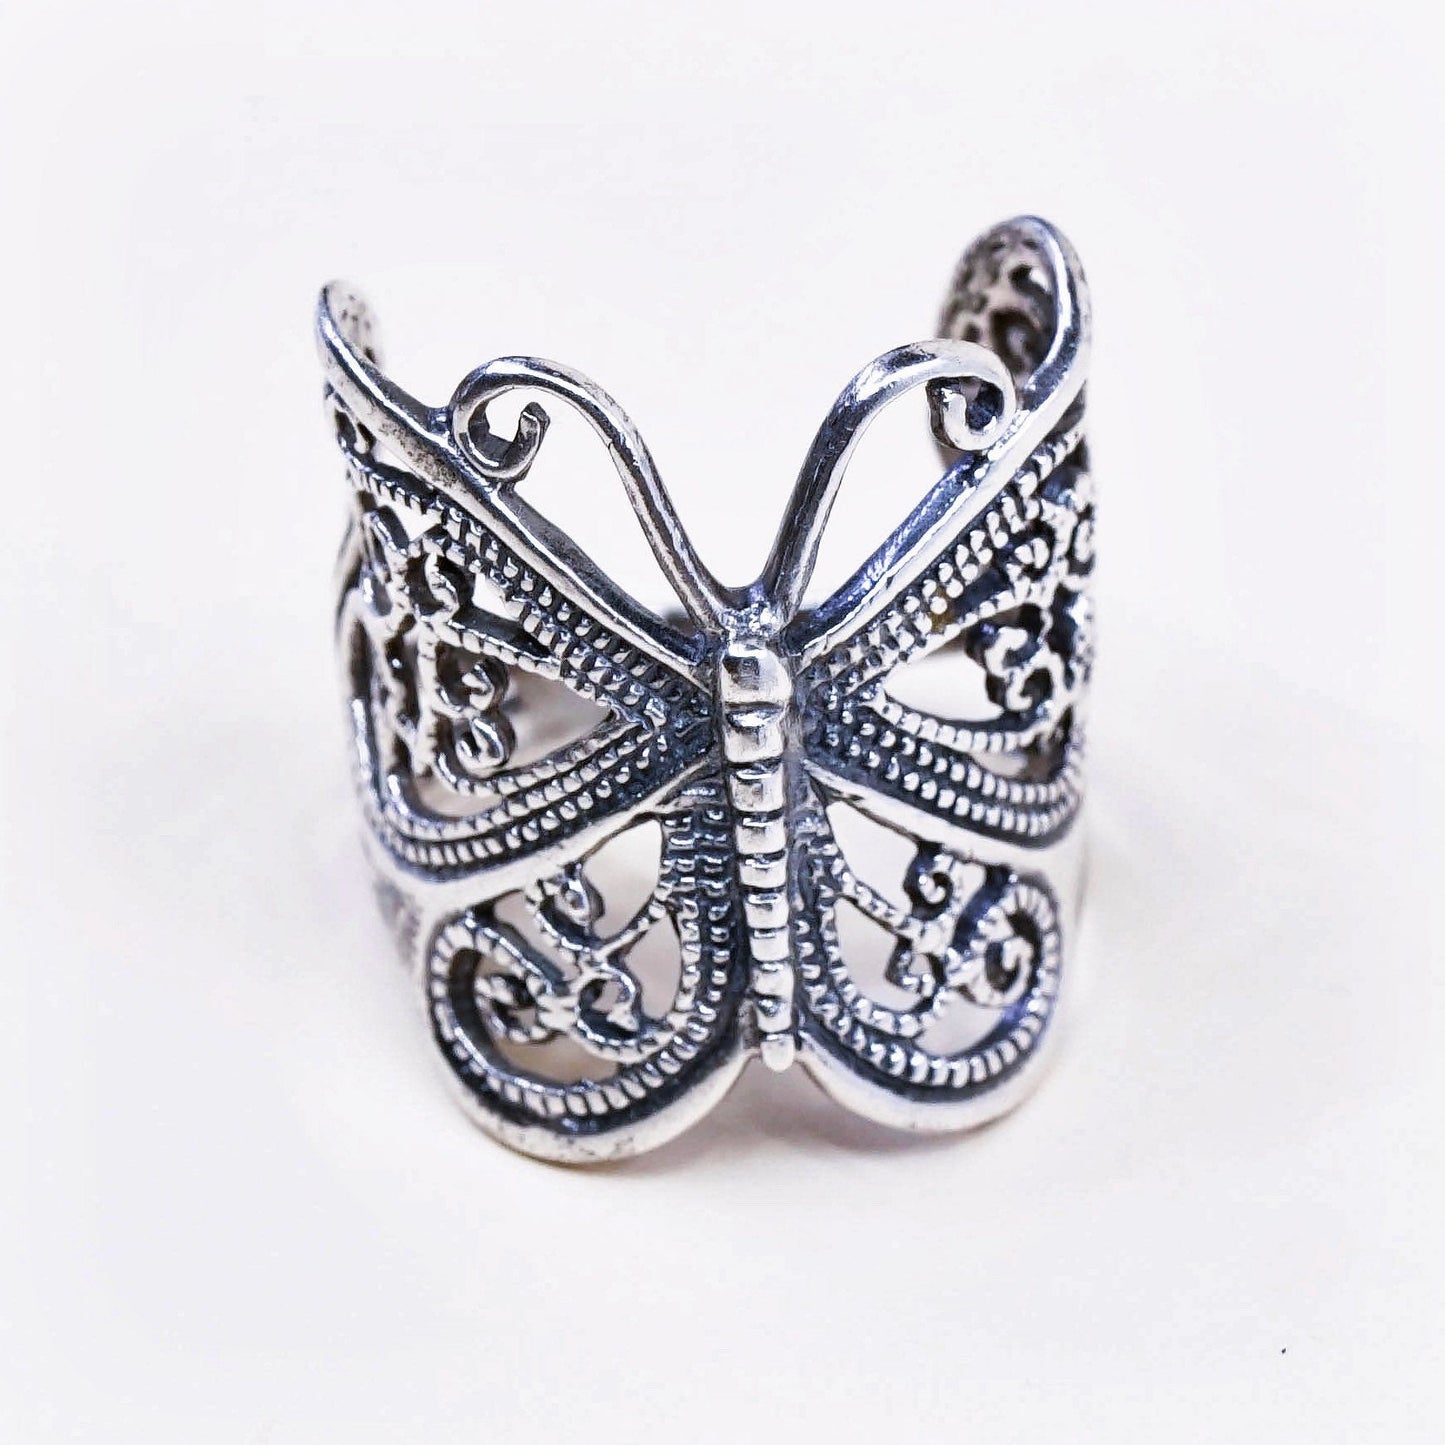 Size 3, vtg Sterling silver handmade ring, 925 filigree butterfly band